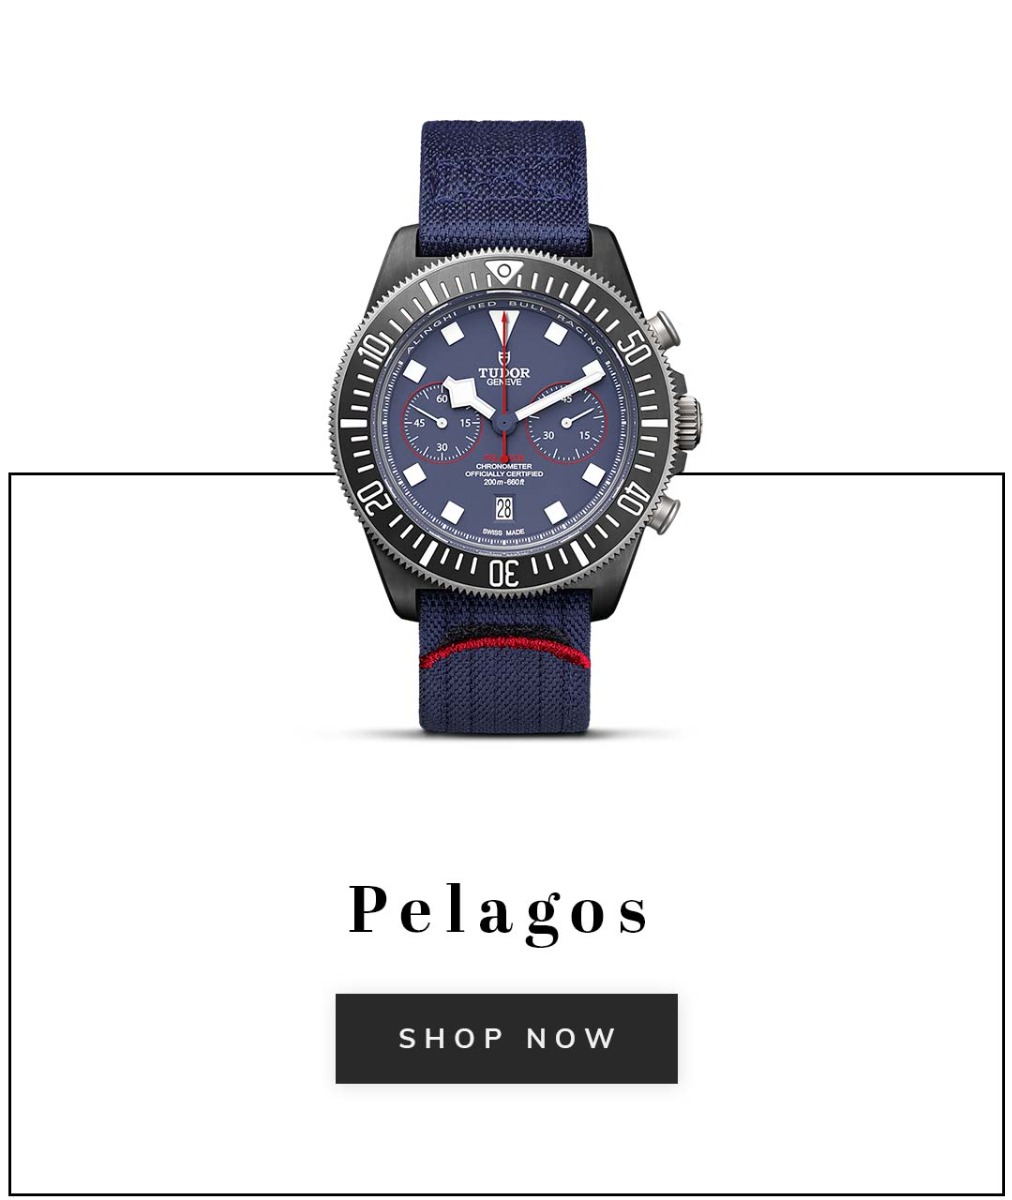 A Tudor Pelagos watch with text shop now